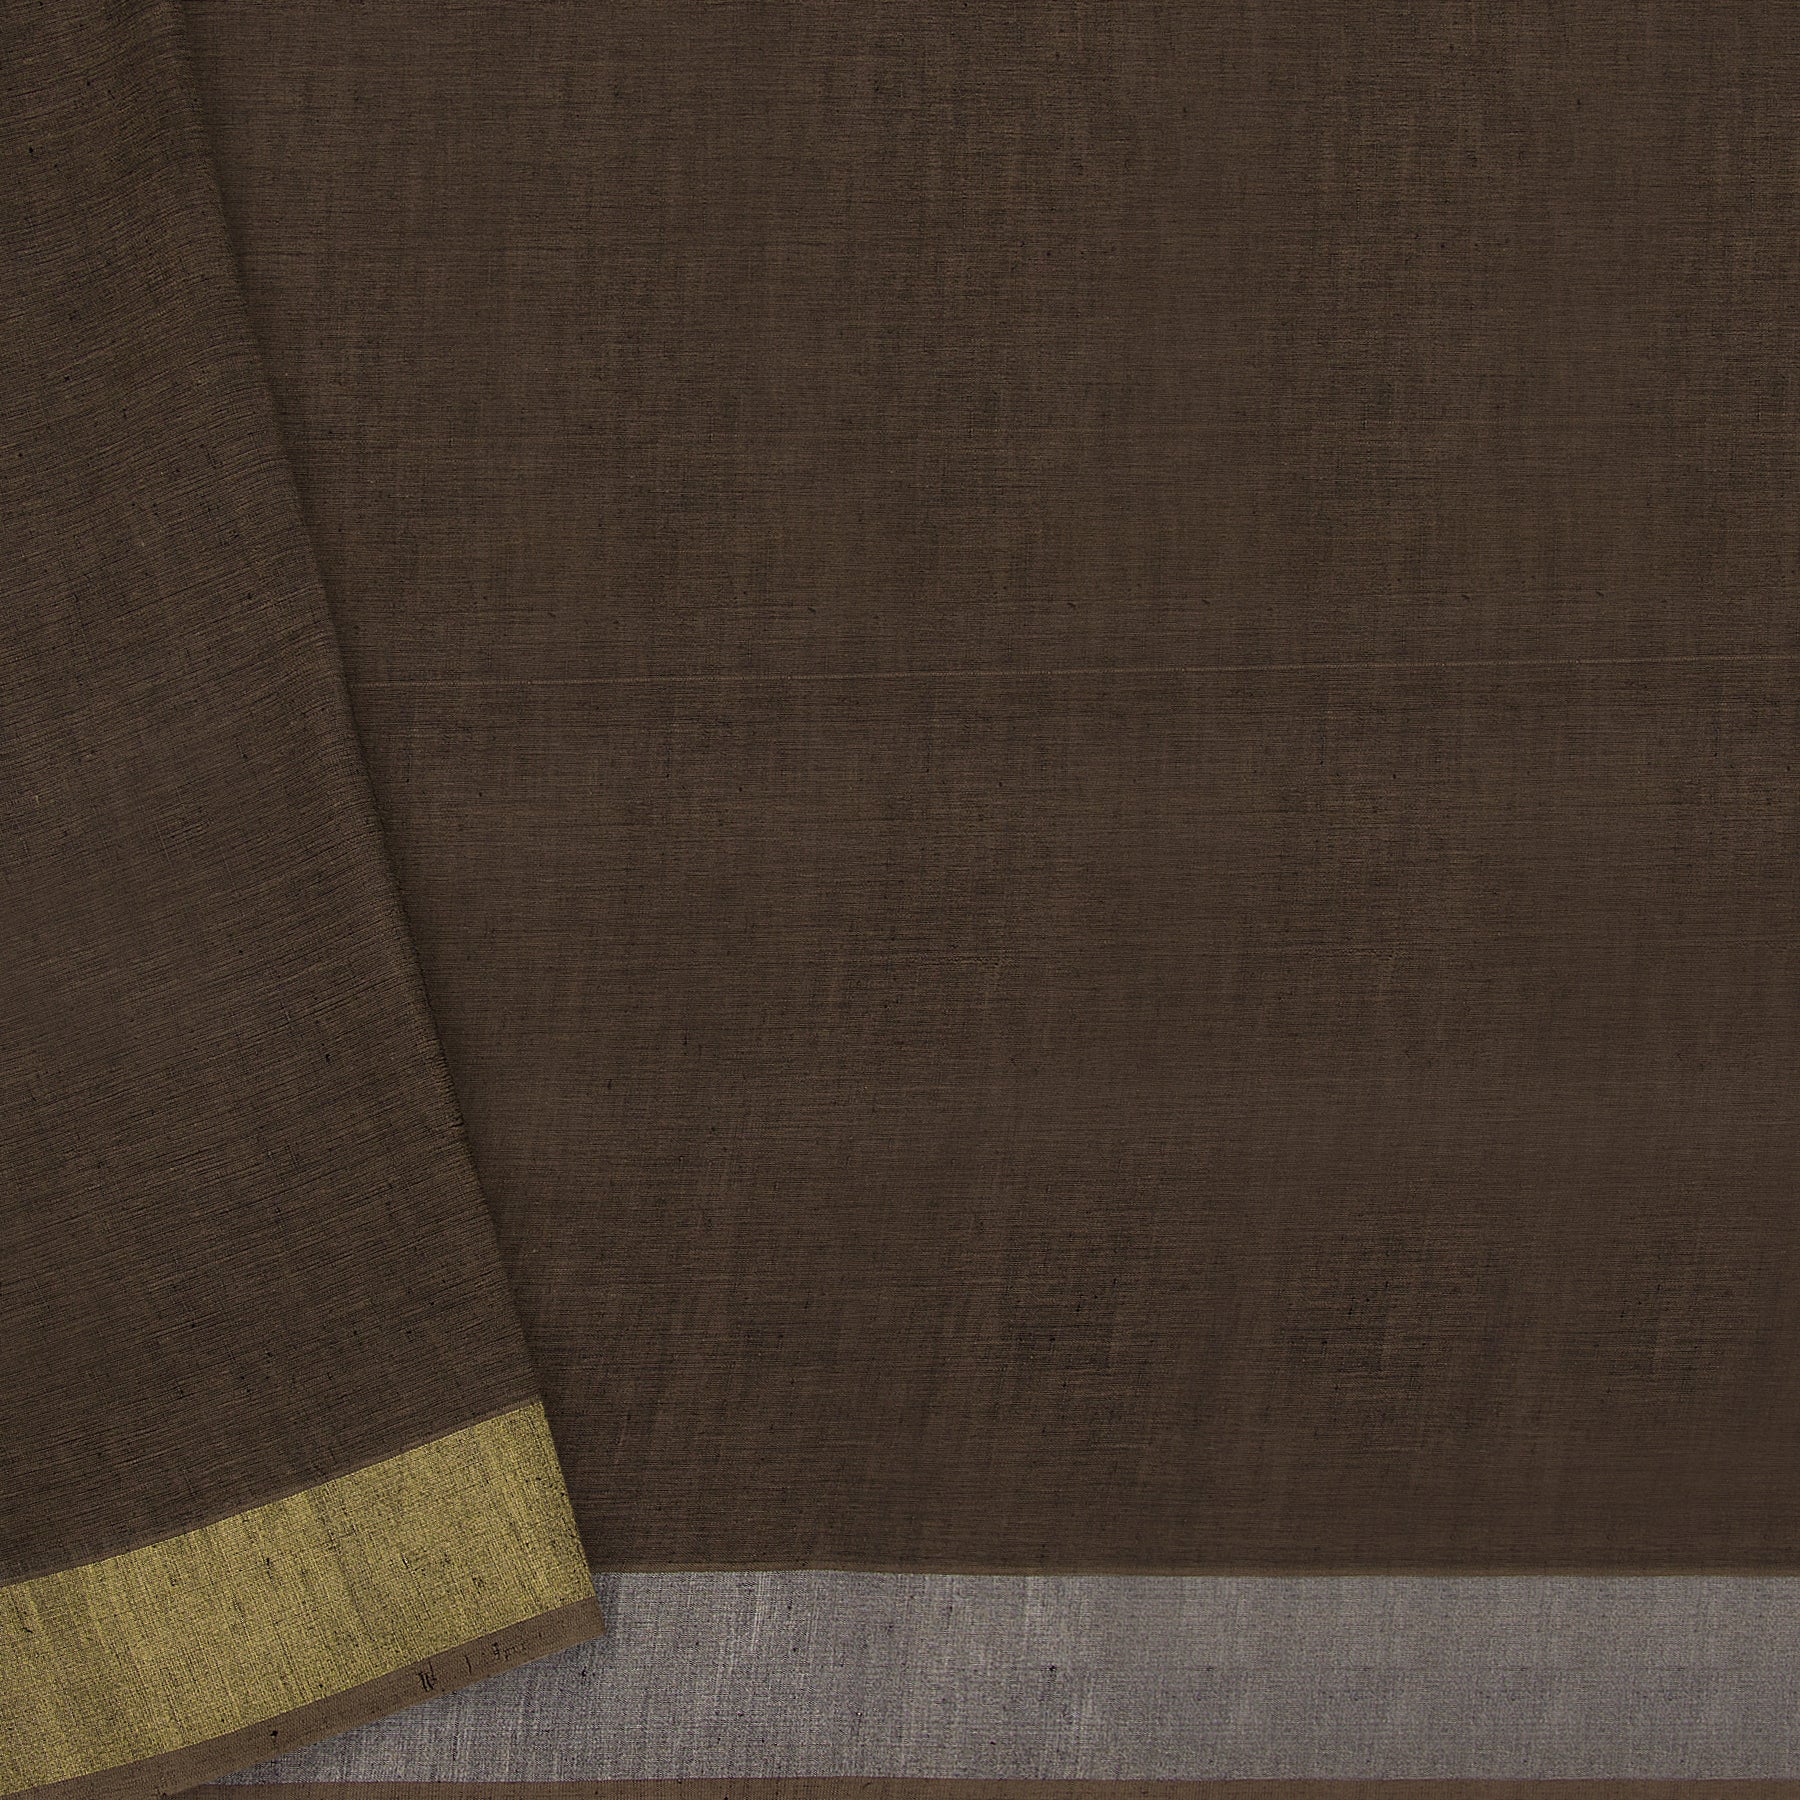 Pradeep Pillai Linen/Cotton Sari 23-008-HS004-00532 - Blouse View